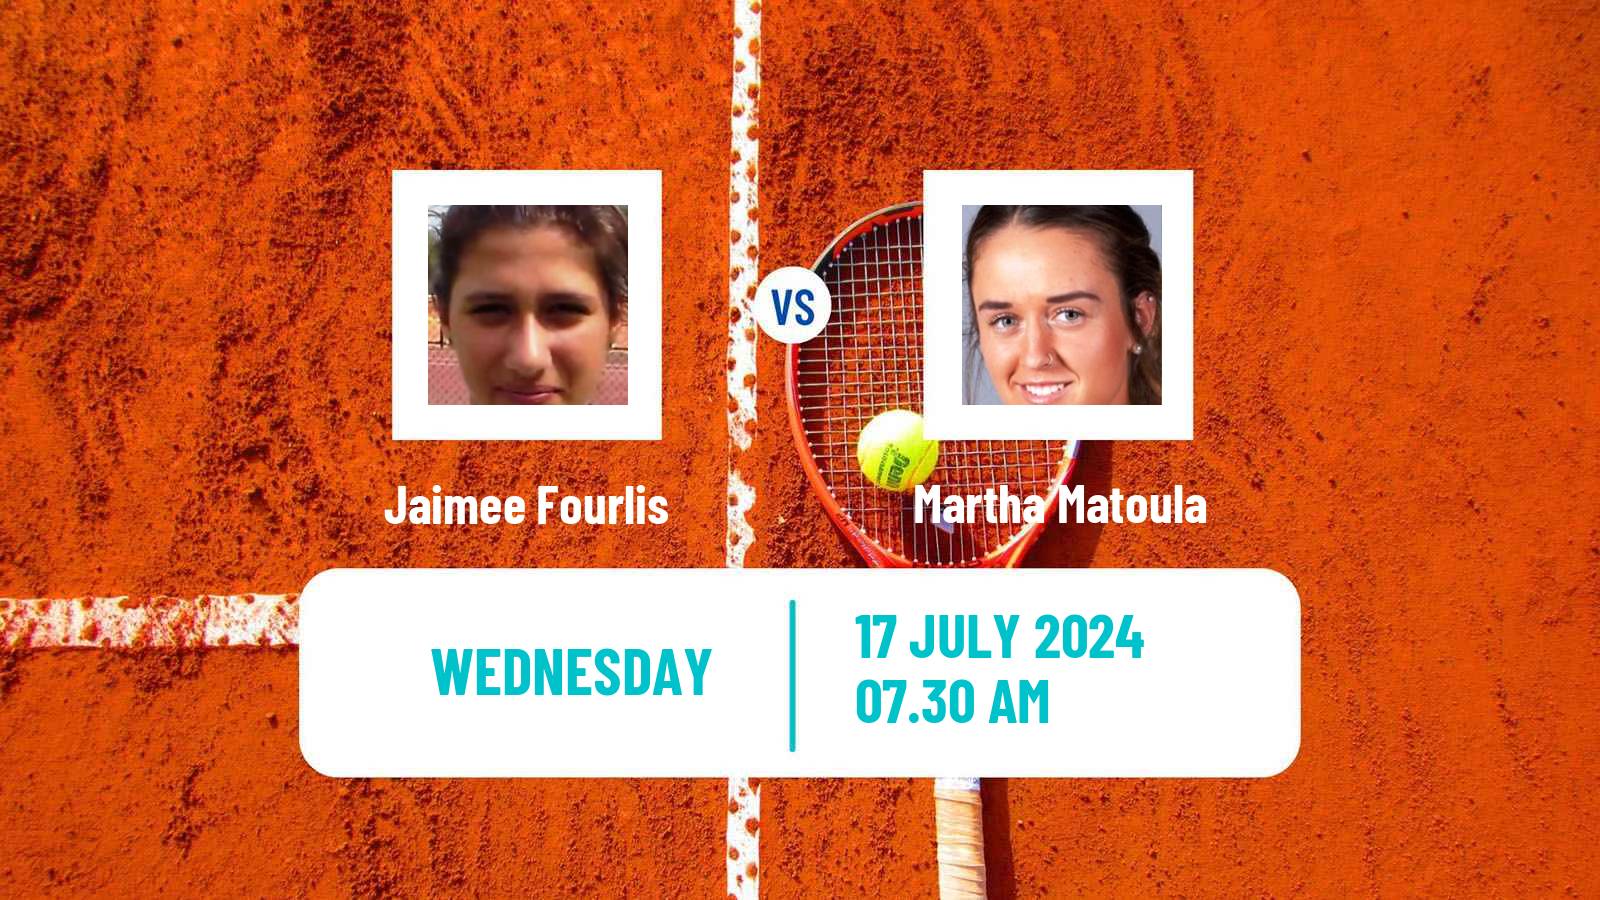 Tennis ITF W35 Darmstadt Women Jaimee Fourlis - Martha Matoula